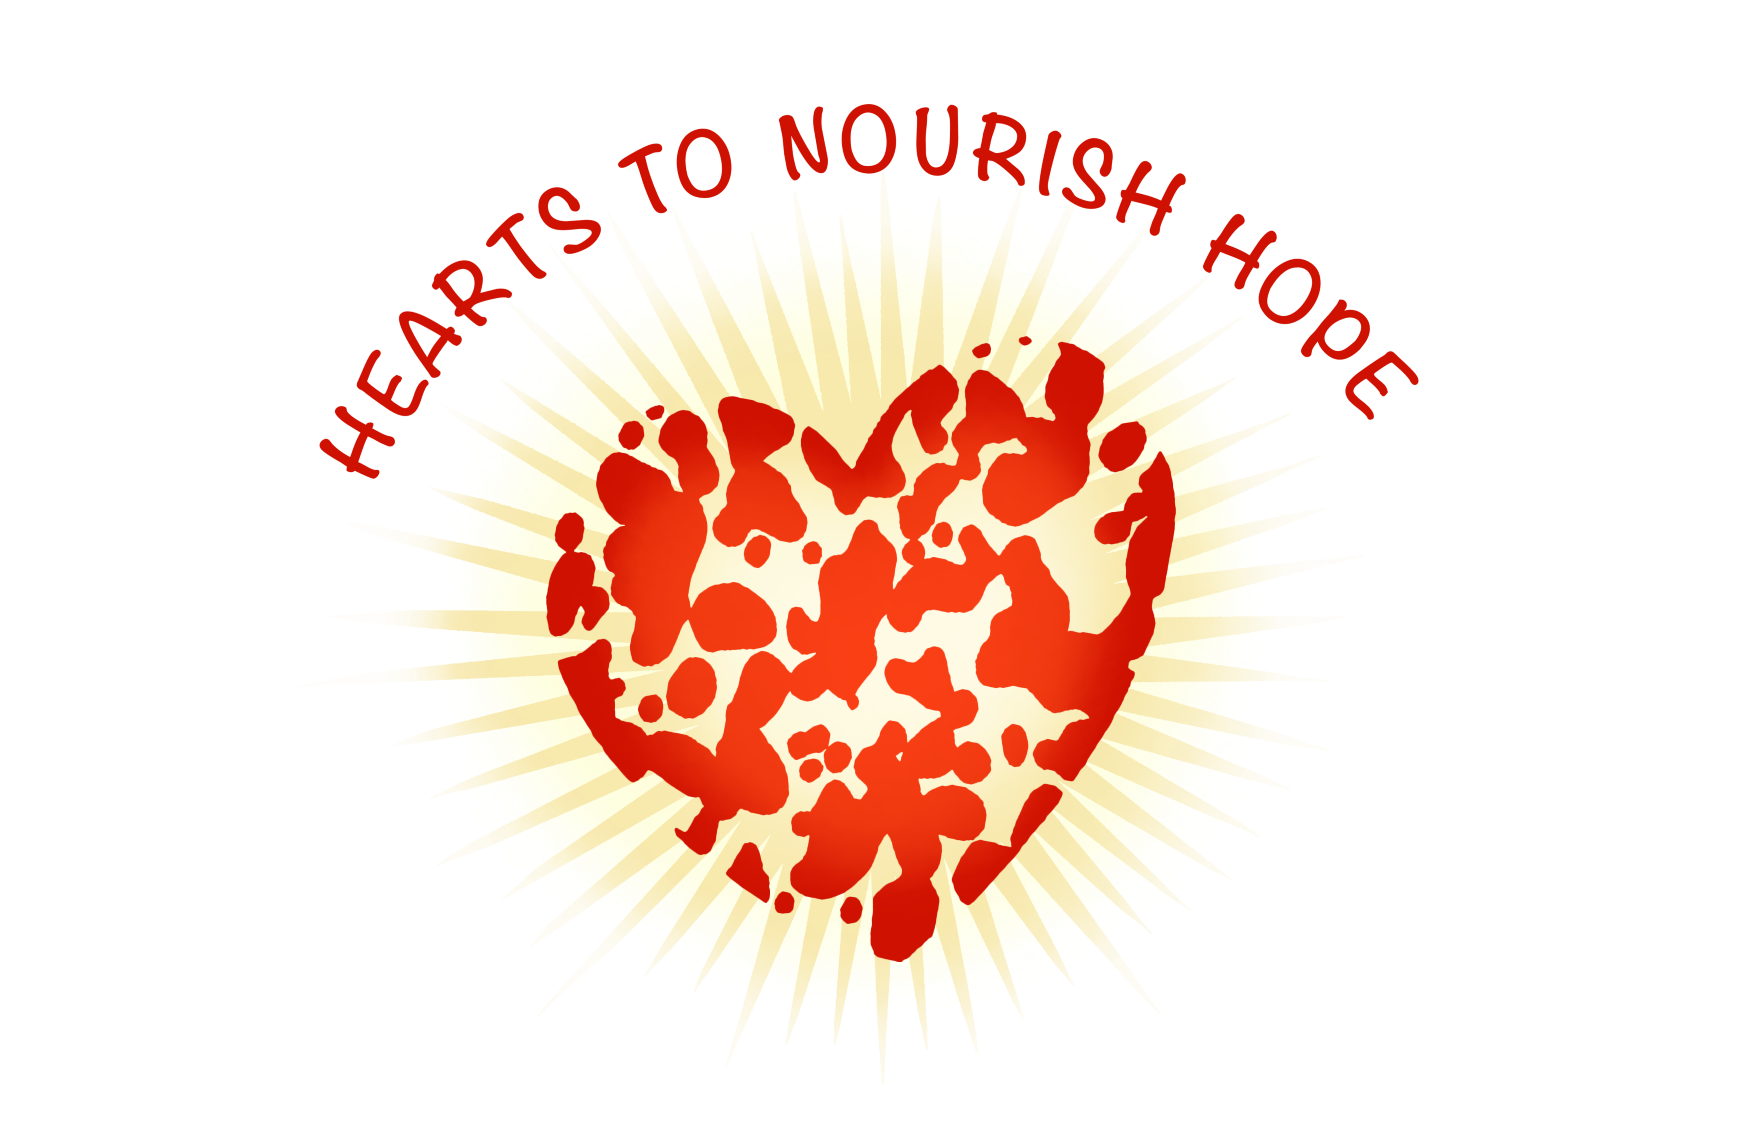 HandsOn Atlanta | Partner | Hearts to Nourish Hope